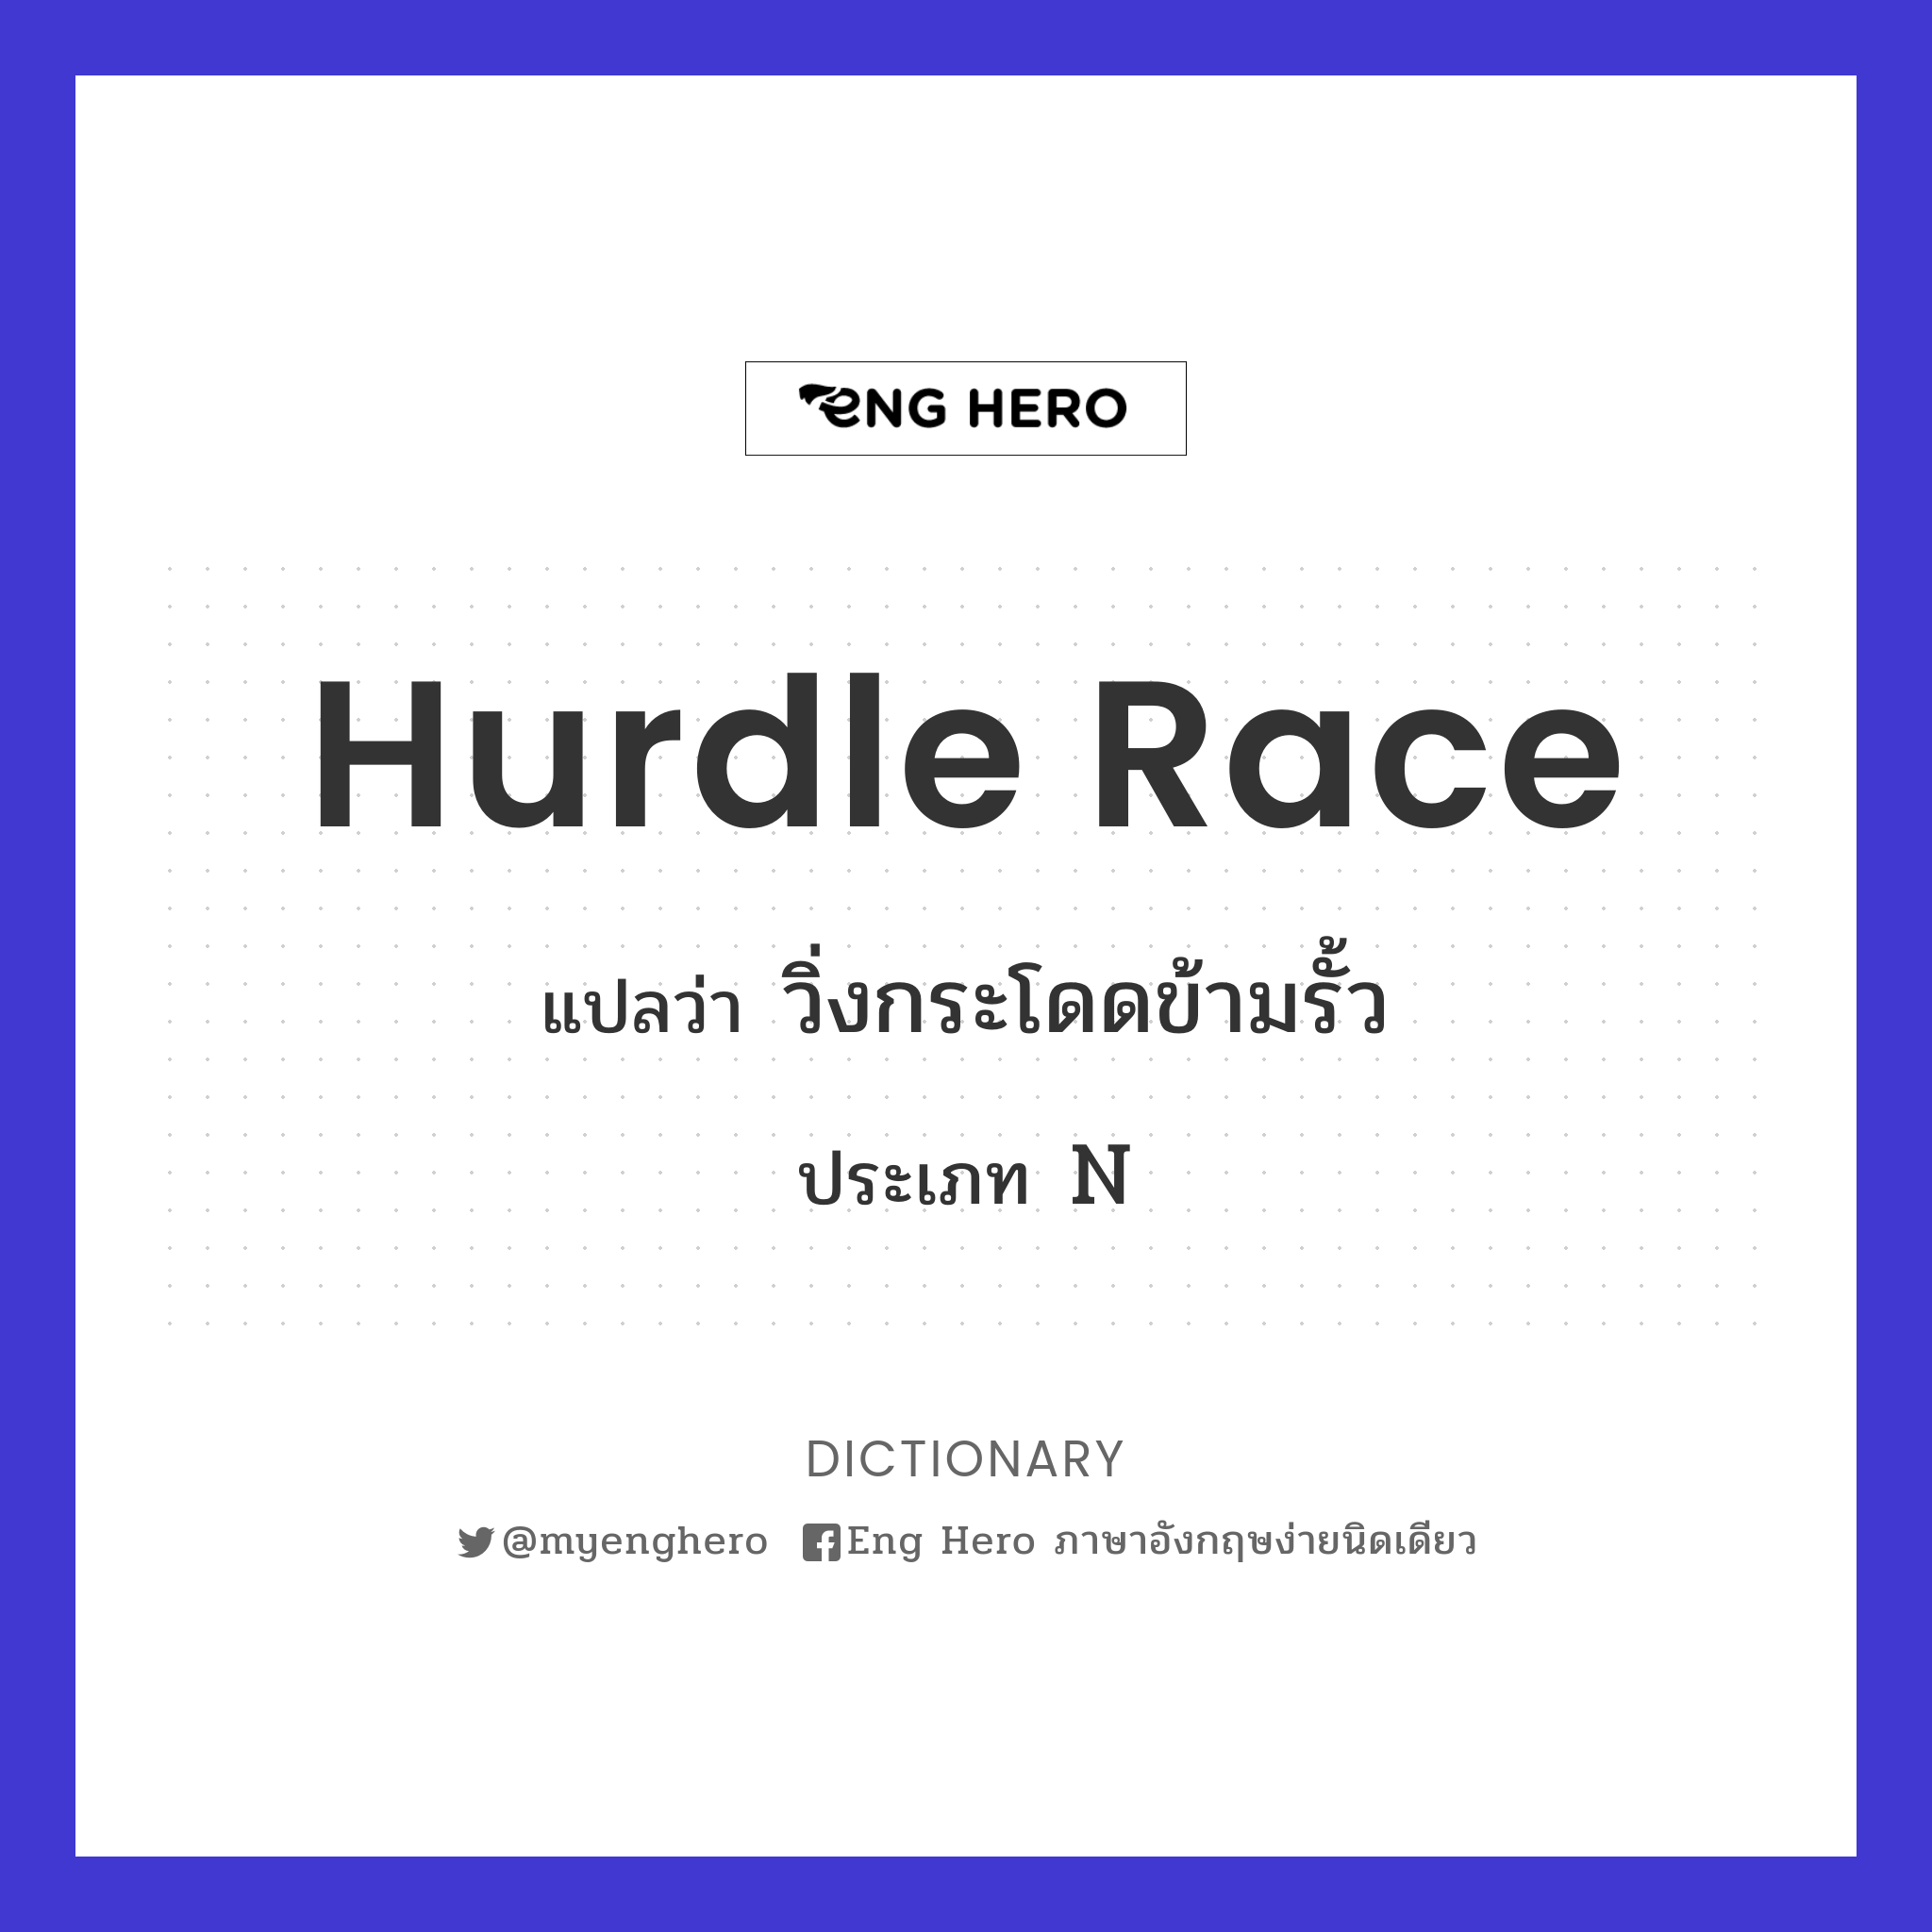 hurdle race